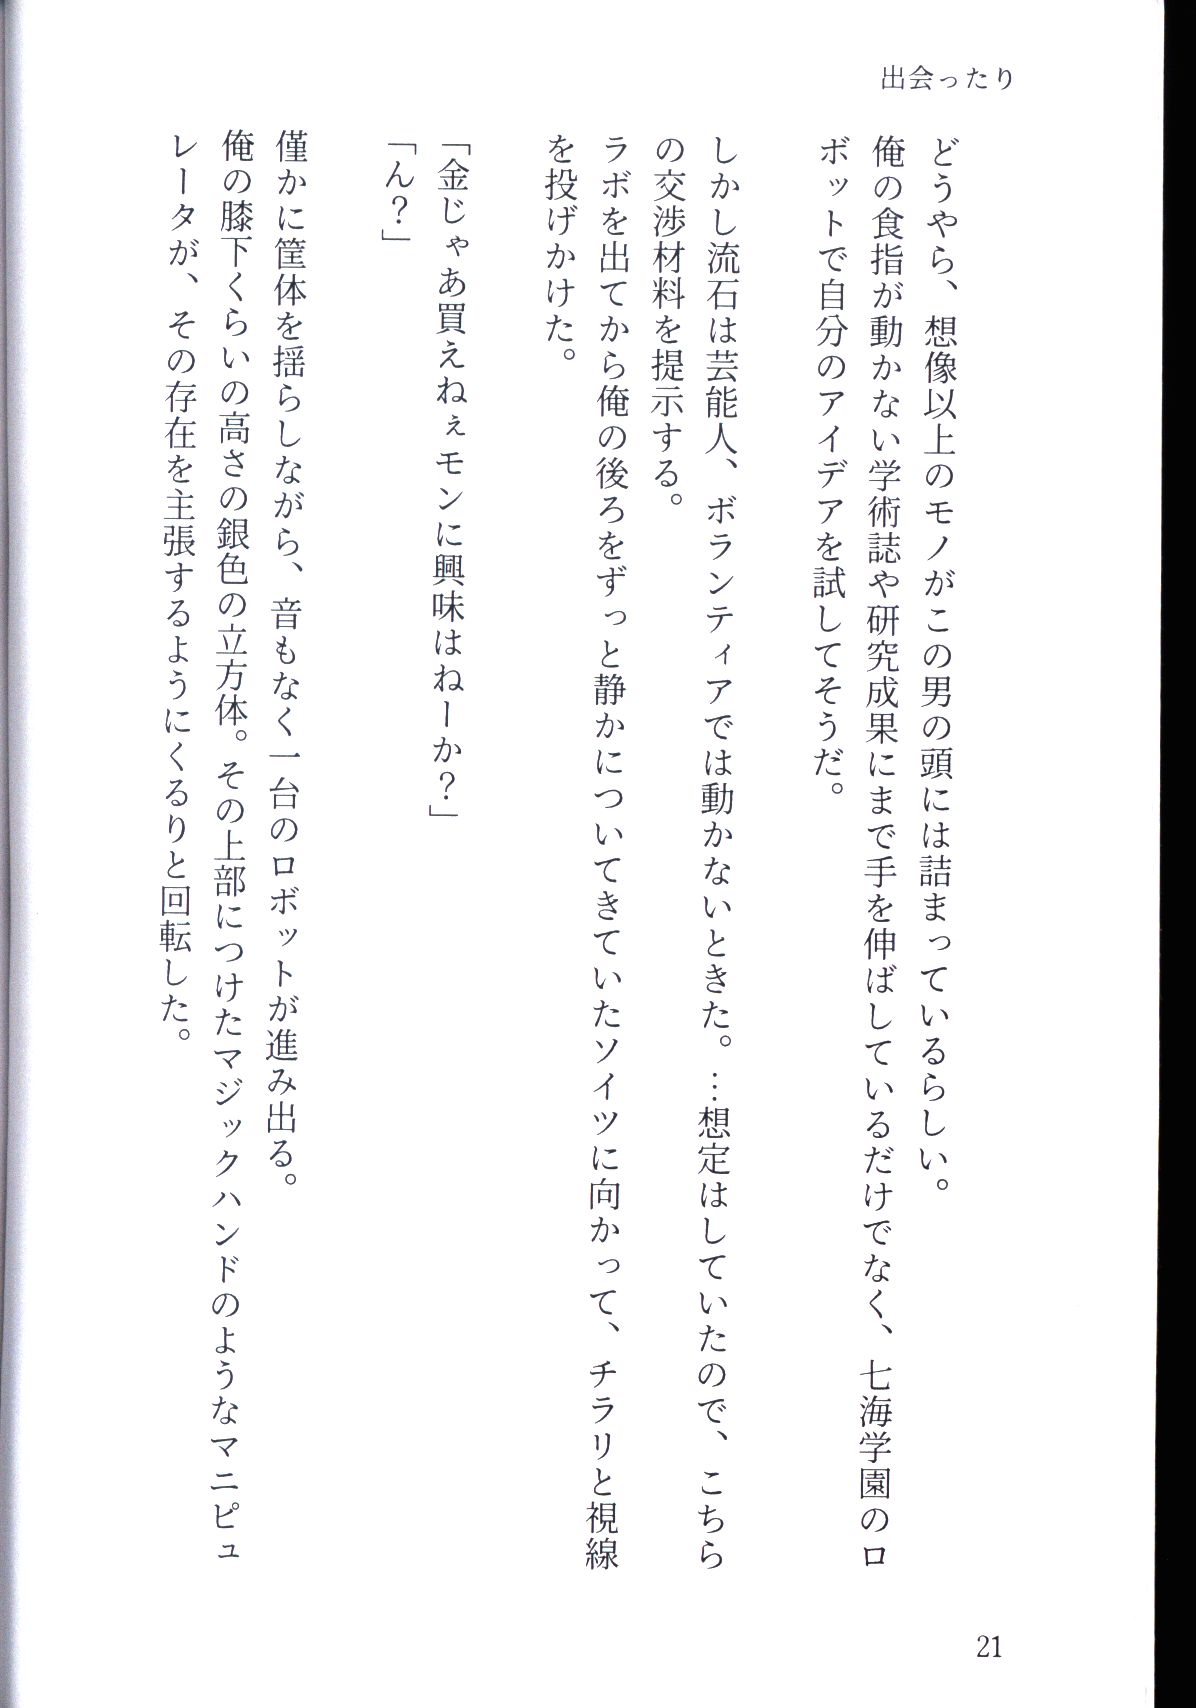 Doujinshi - Novel - Dr.STONE / Senku x Gen (キャンパスに彩りを *文庫) / H2CO3